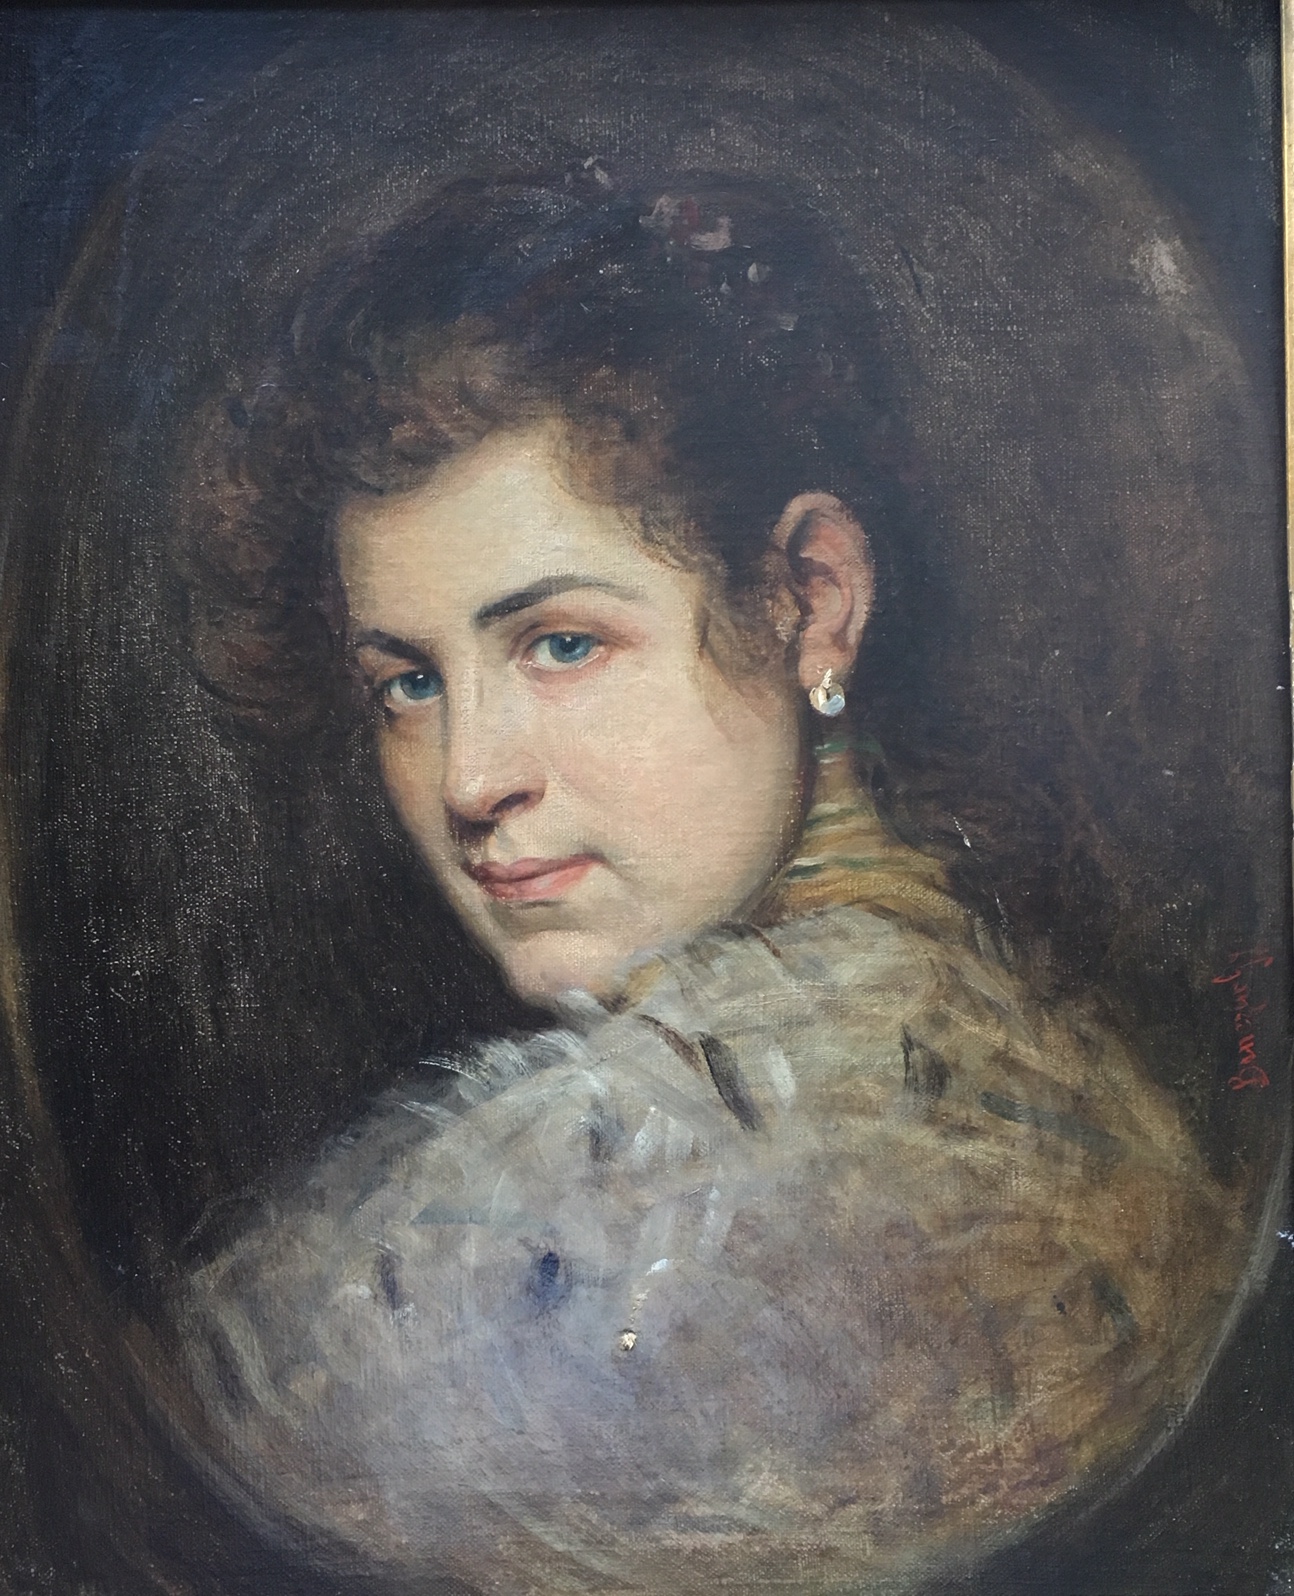 Benczúr, Gyula: Female portrait